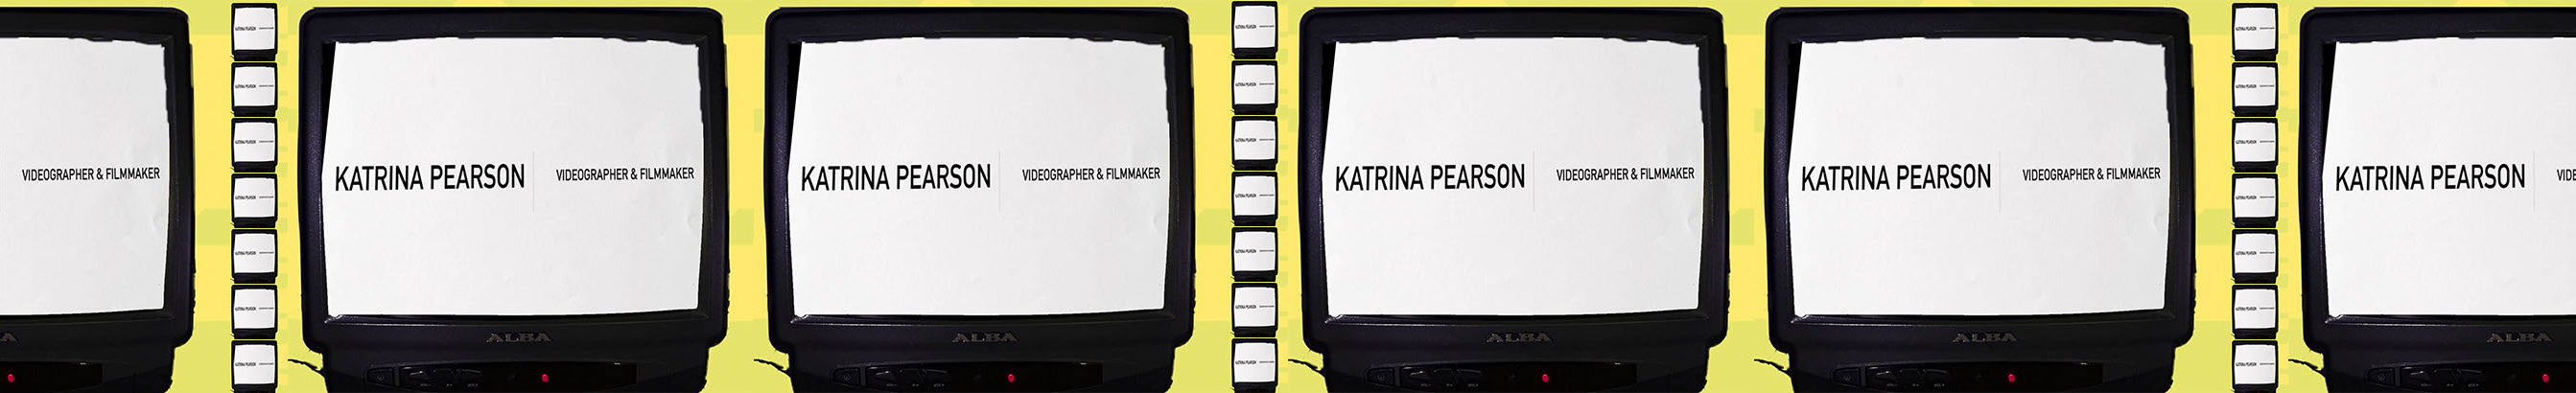 Katrina Pearson's profile banner